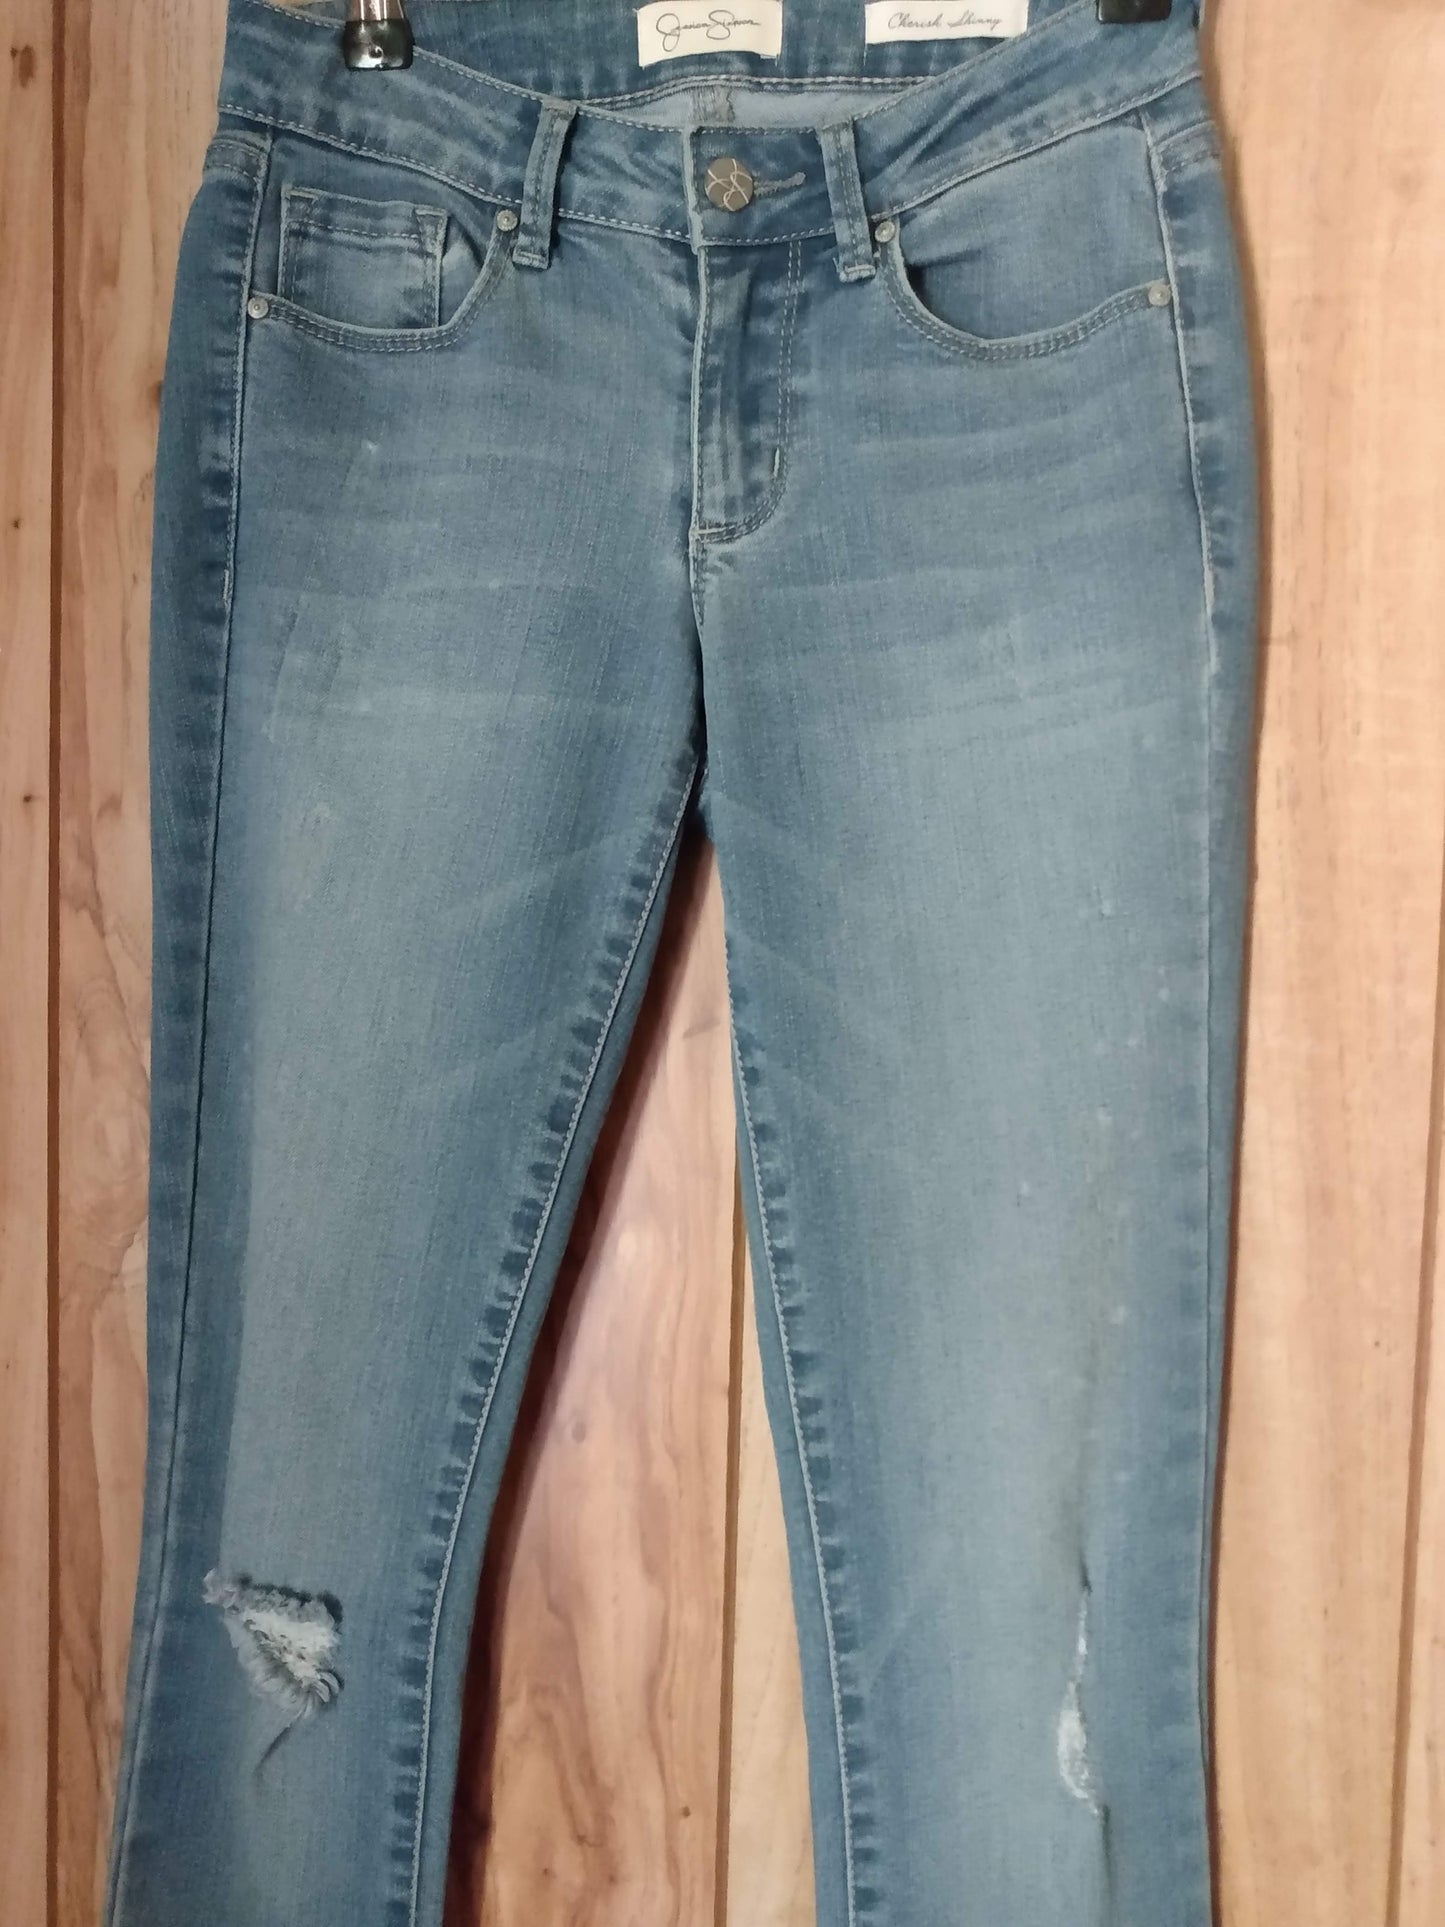 Women's Jessica Simpson jeans size 25